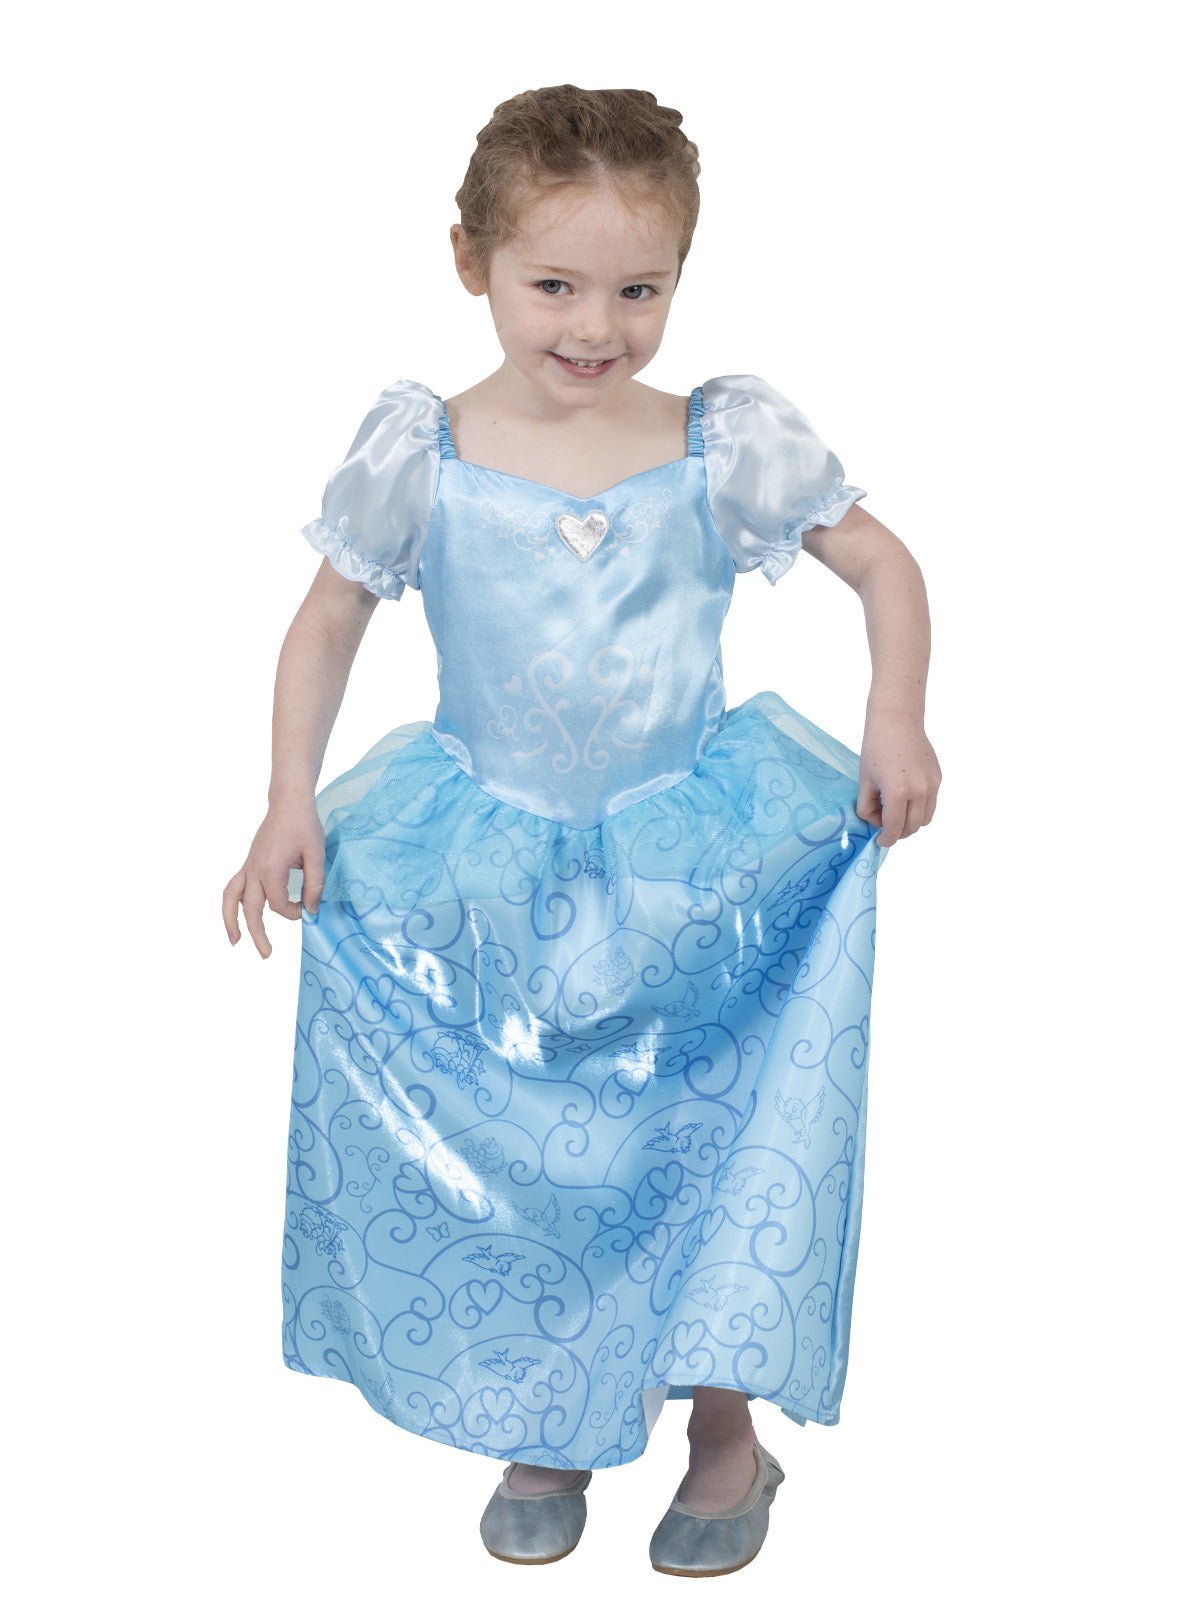 Cinderella Filagree Costume - Size 4-6